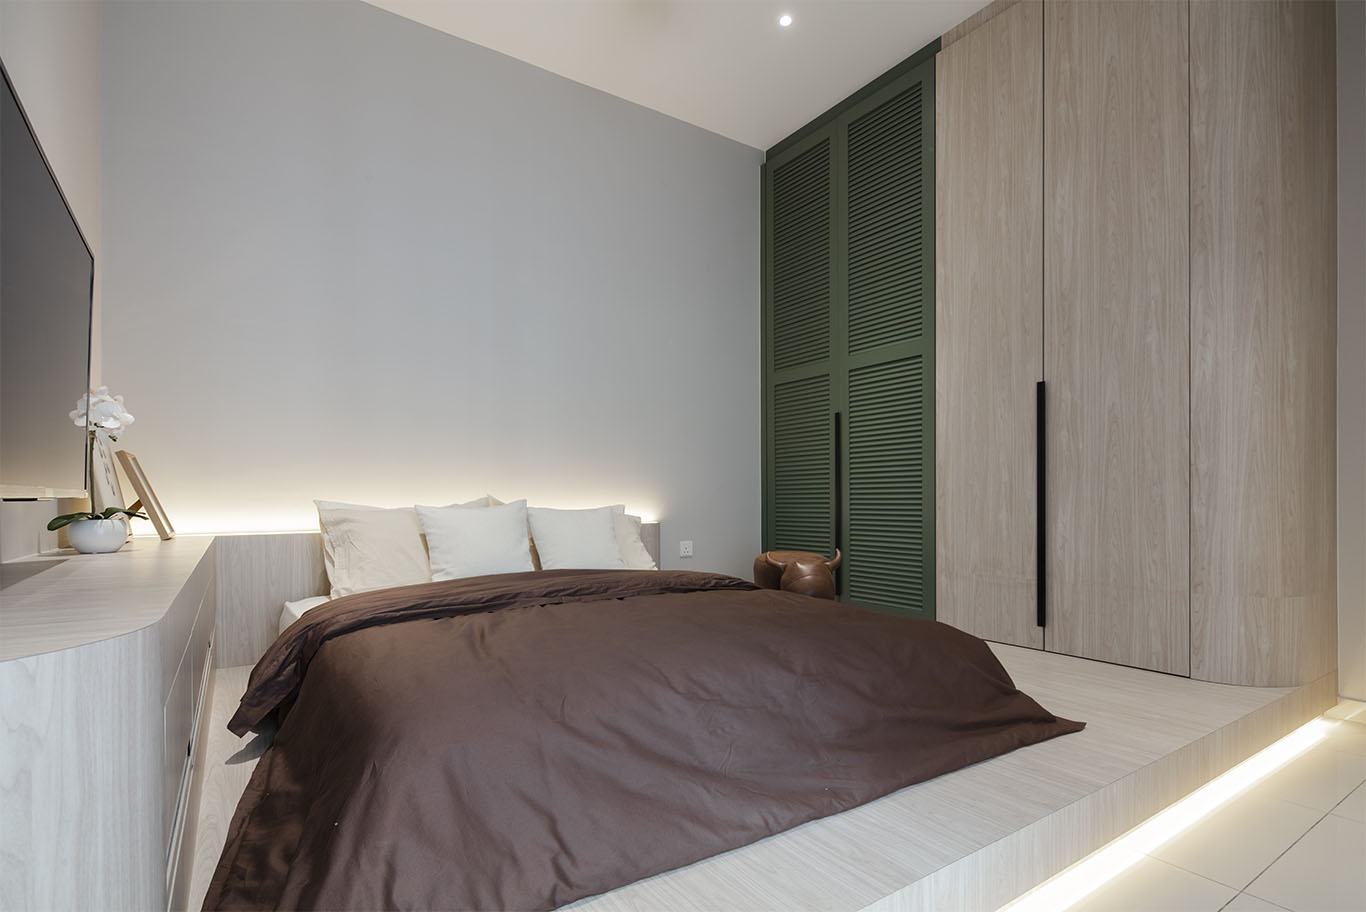 Grande Rhapsody hidden lamp under bed Mieux interior design